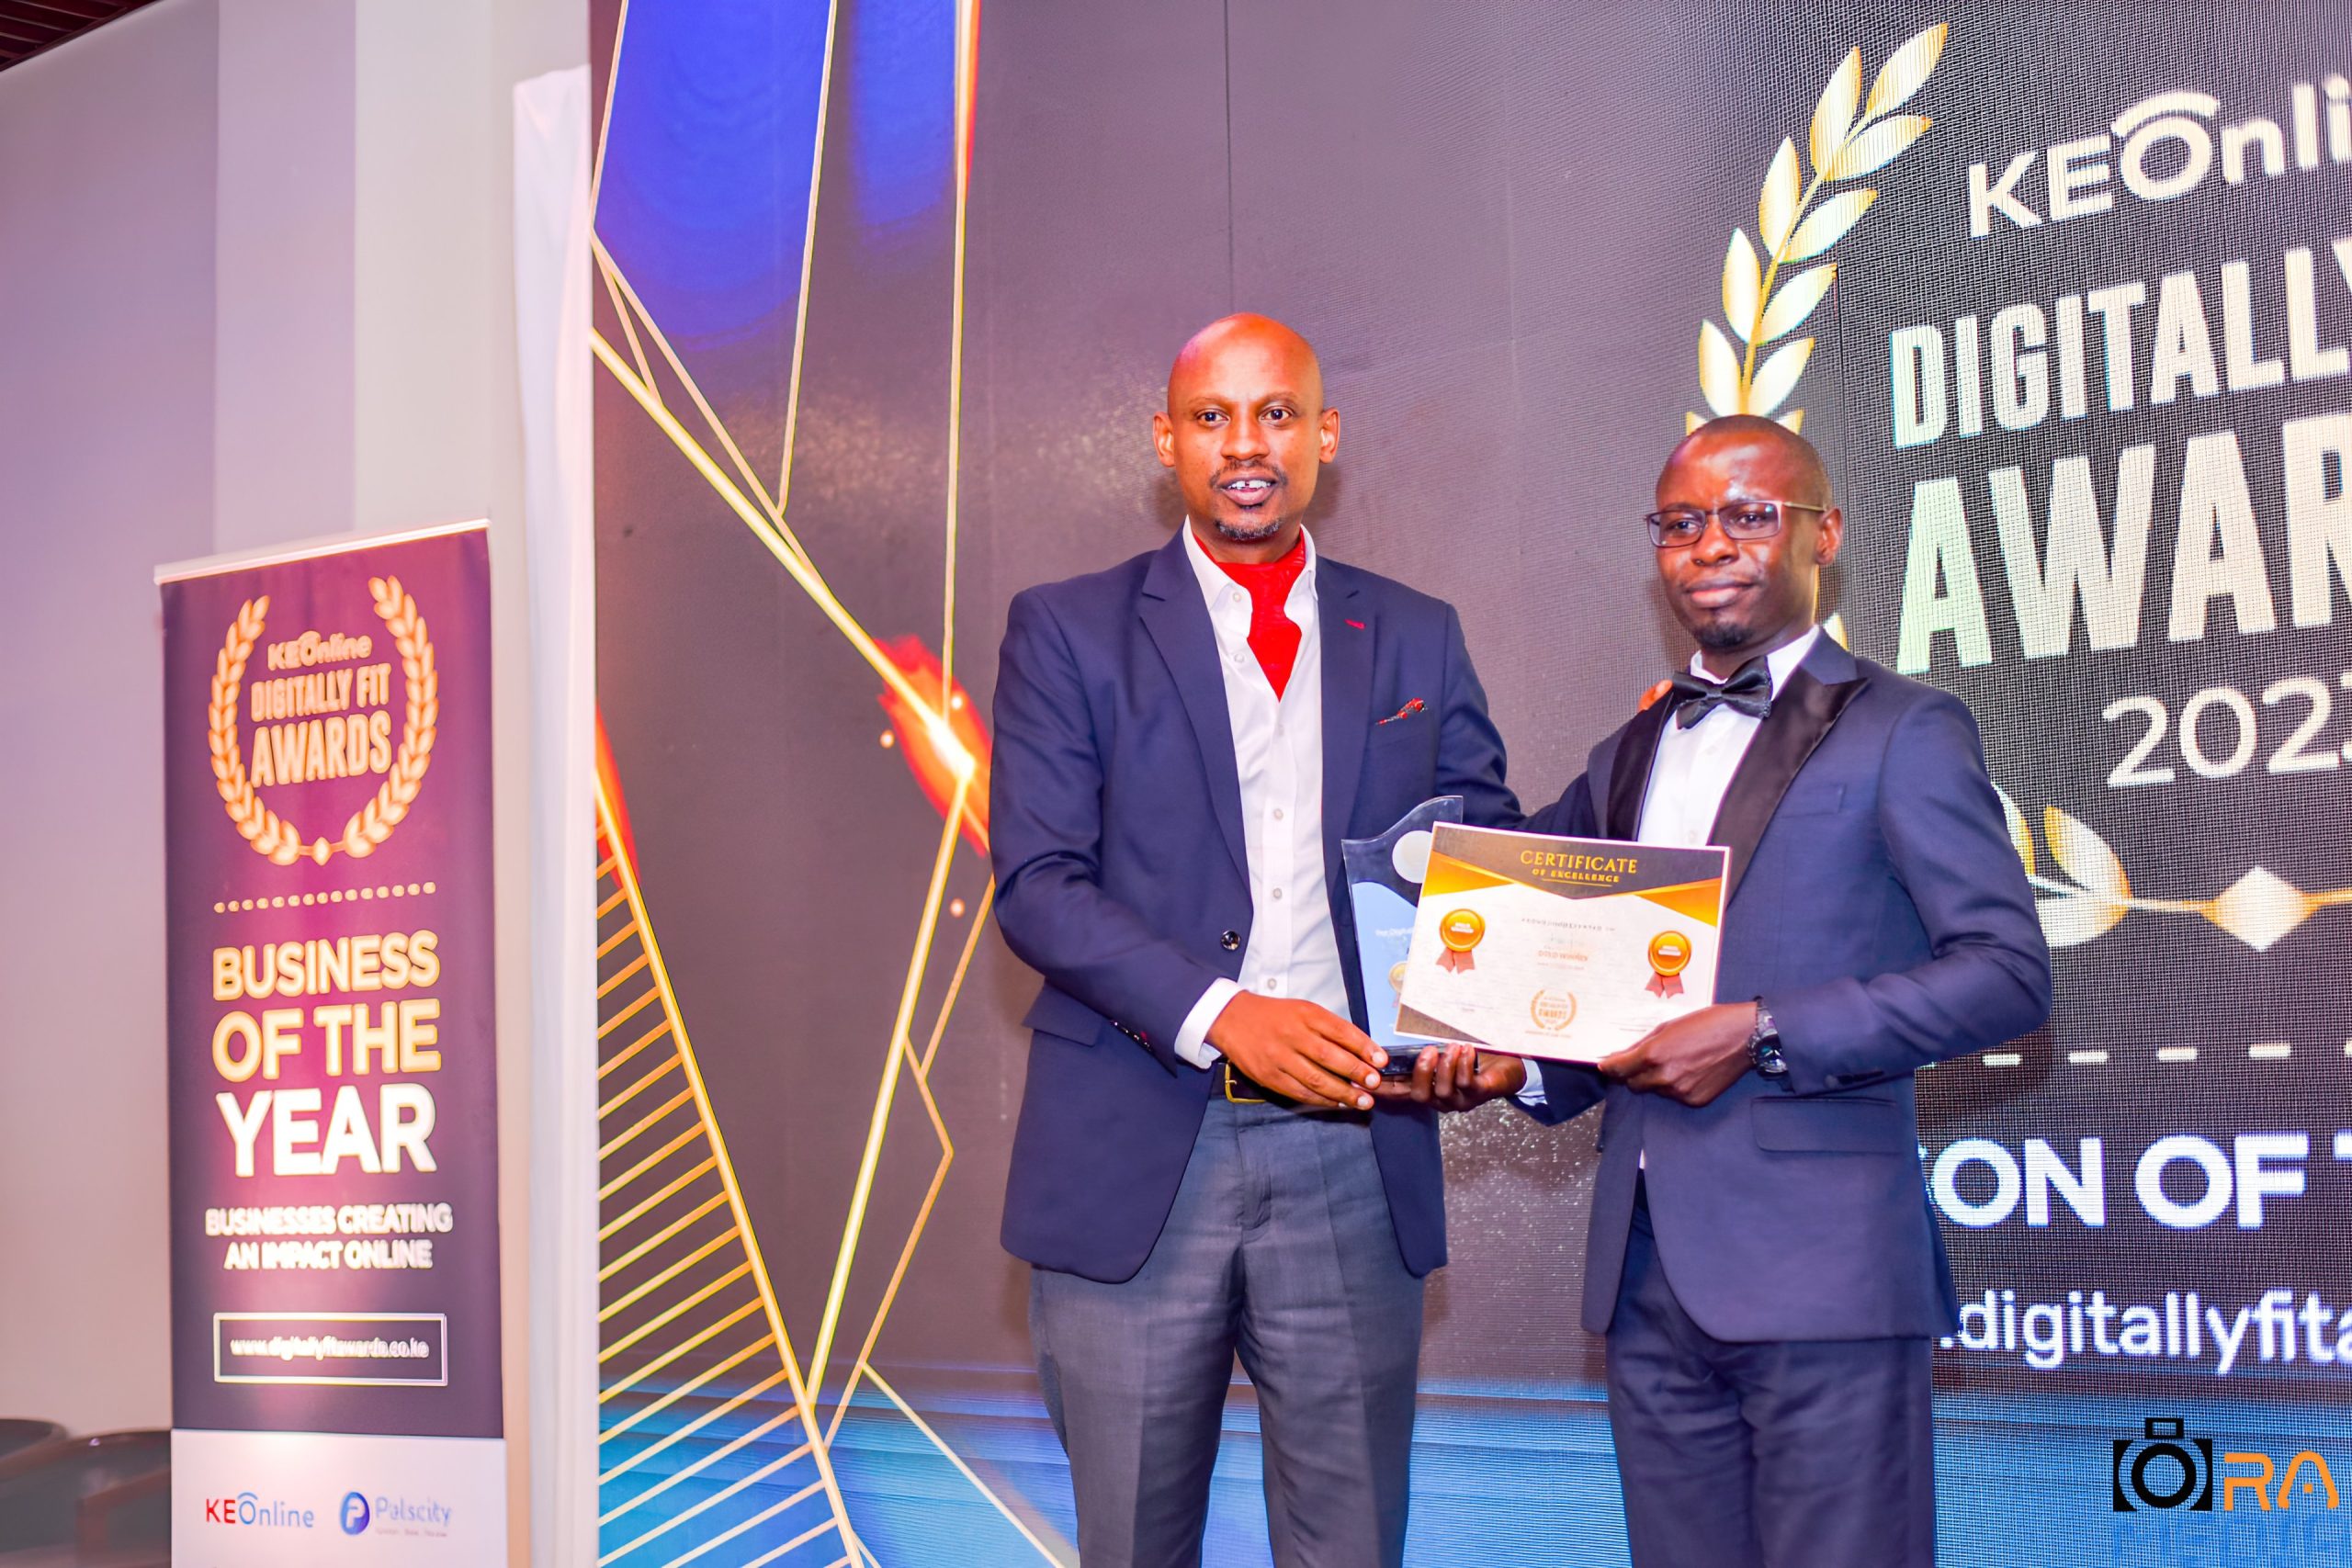 Journalist Enock Sikolia presents the Digitally Fit award to Joseph Kokumu